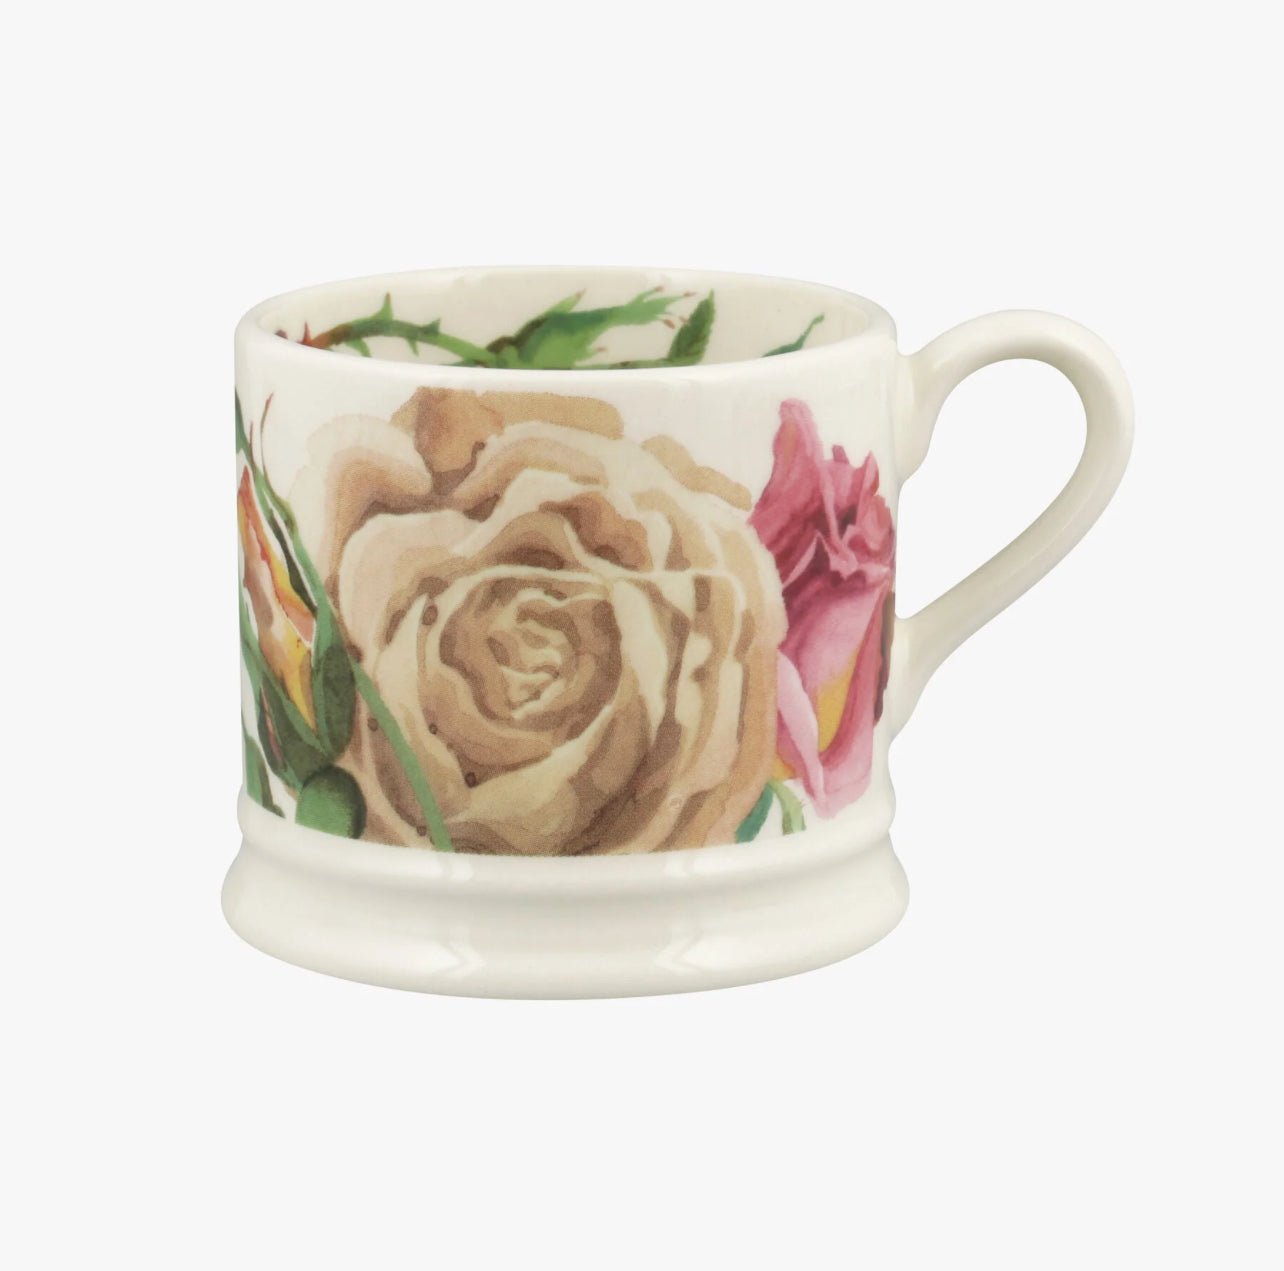 Emma Bridgewater Roses All my Life - Small Mug - The Flower Crate